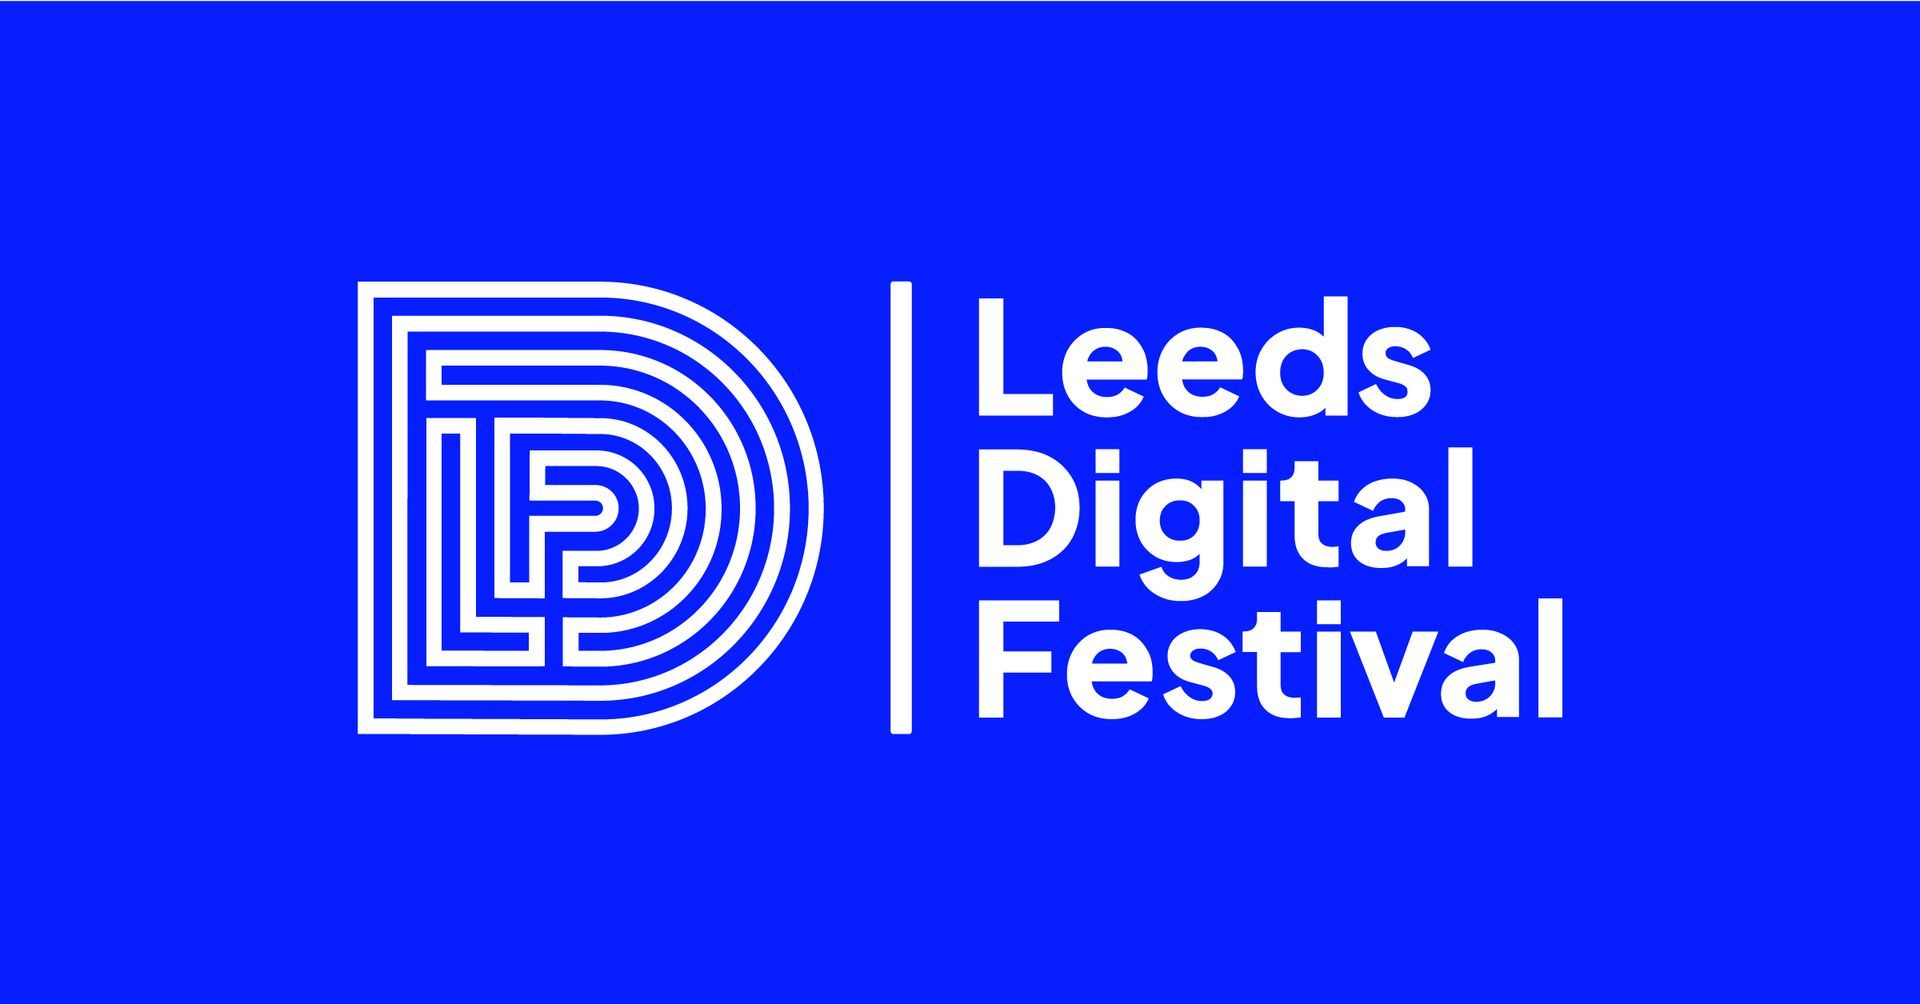 The leeds digital festival logo is on a blue background.